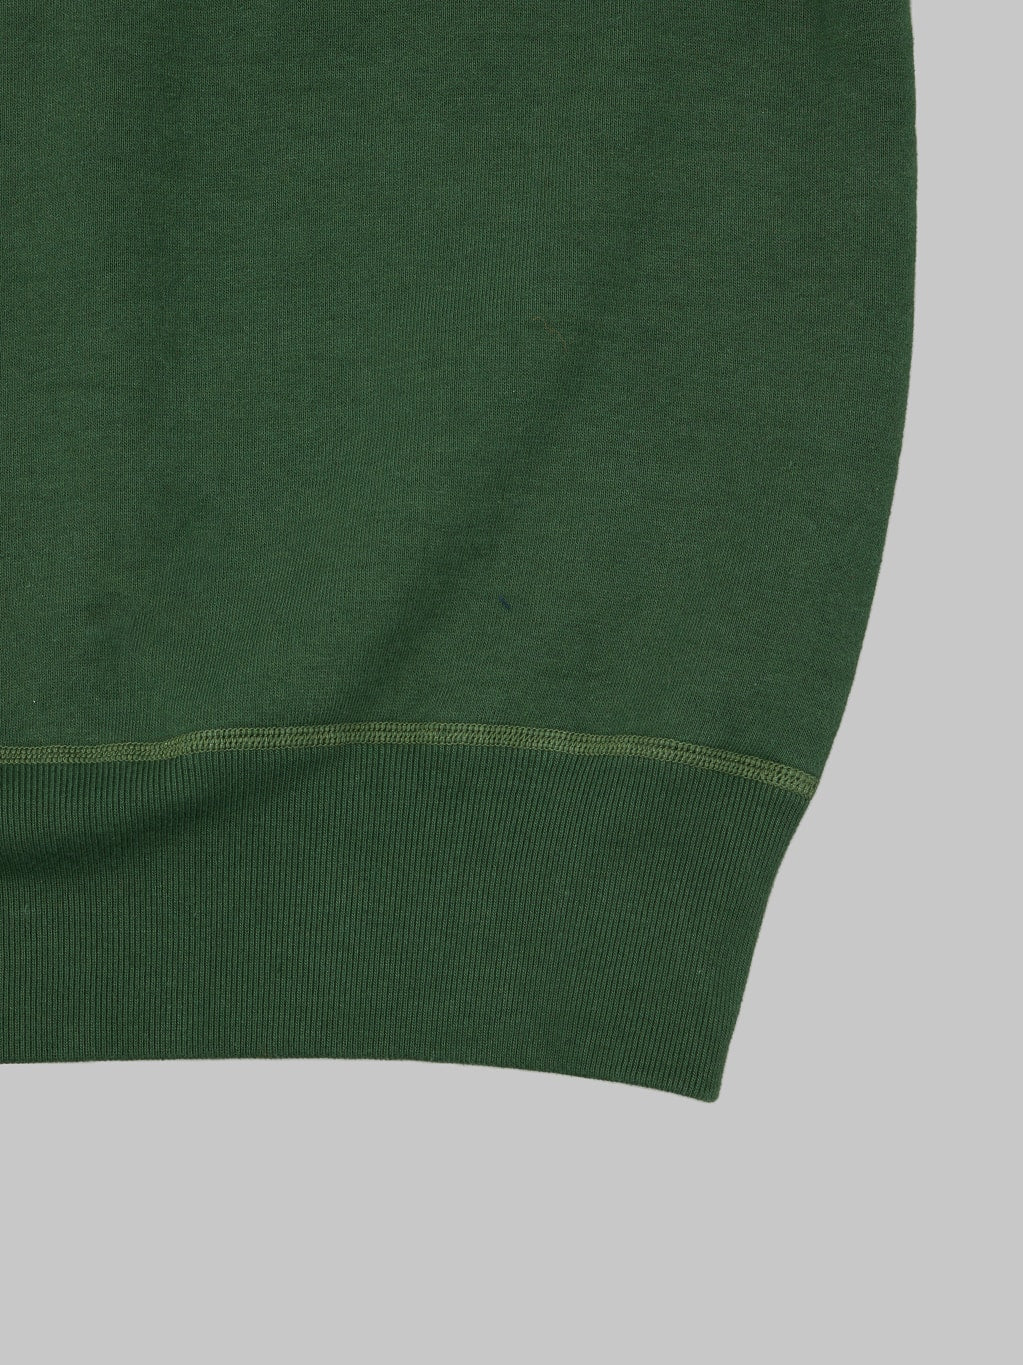 The Strike Gold Loopwheeled Sweatshirt Green elastic waist